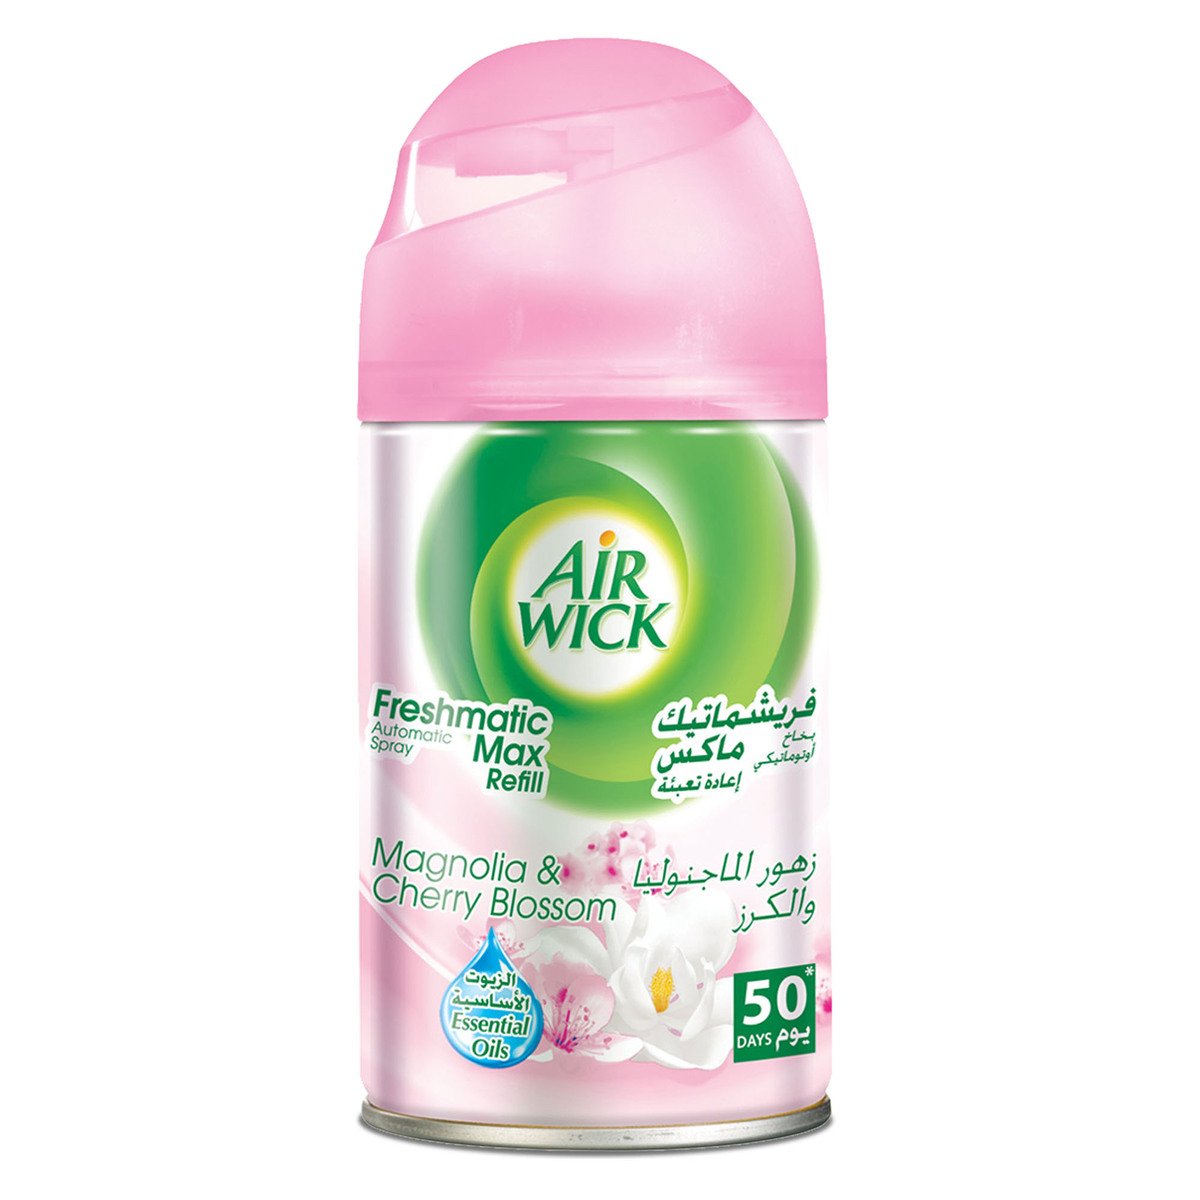 Airwick Freshmatic Autospray Refill Magnolia and Cherry Blossom 250 ml